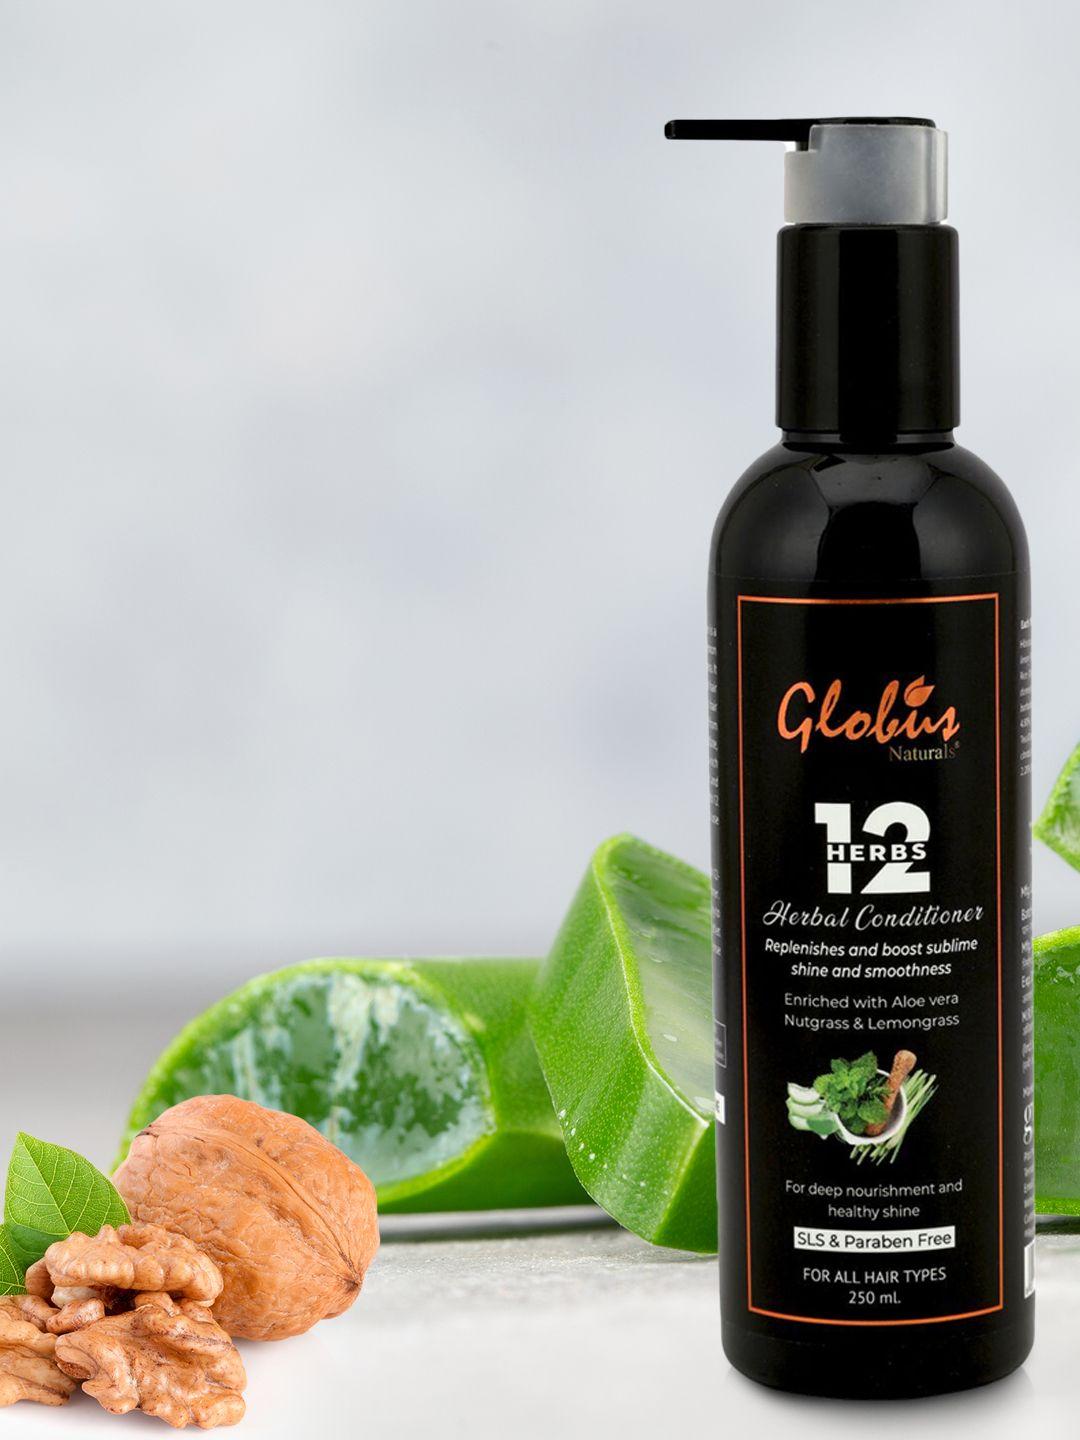 globus naturals 12 herbs hair growth conditioner 250 ml